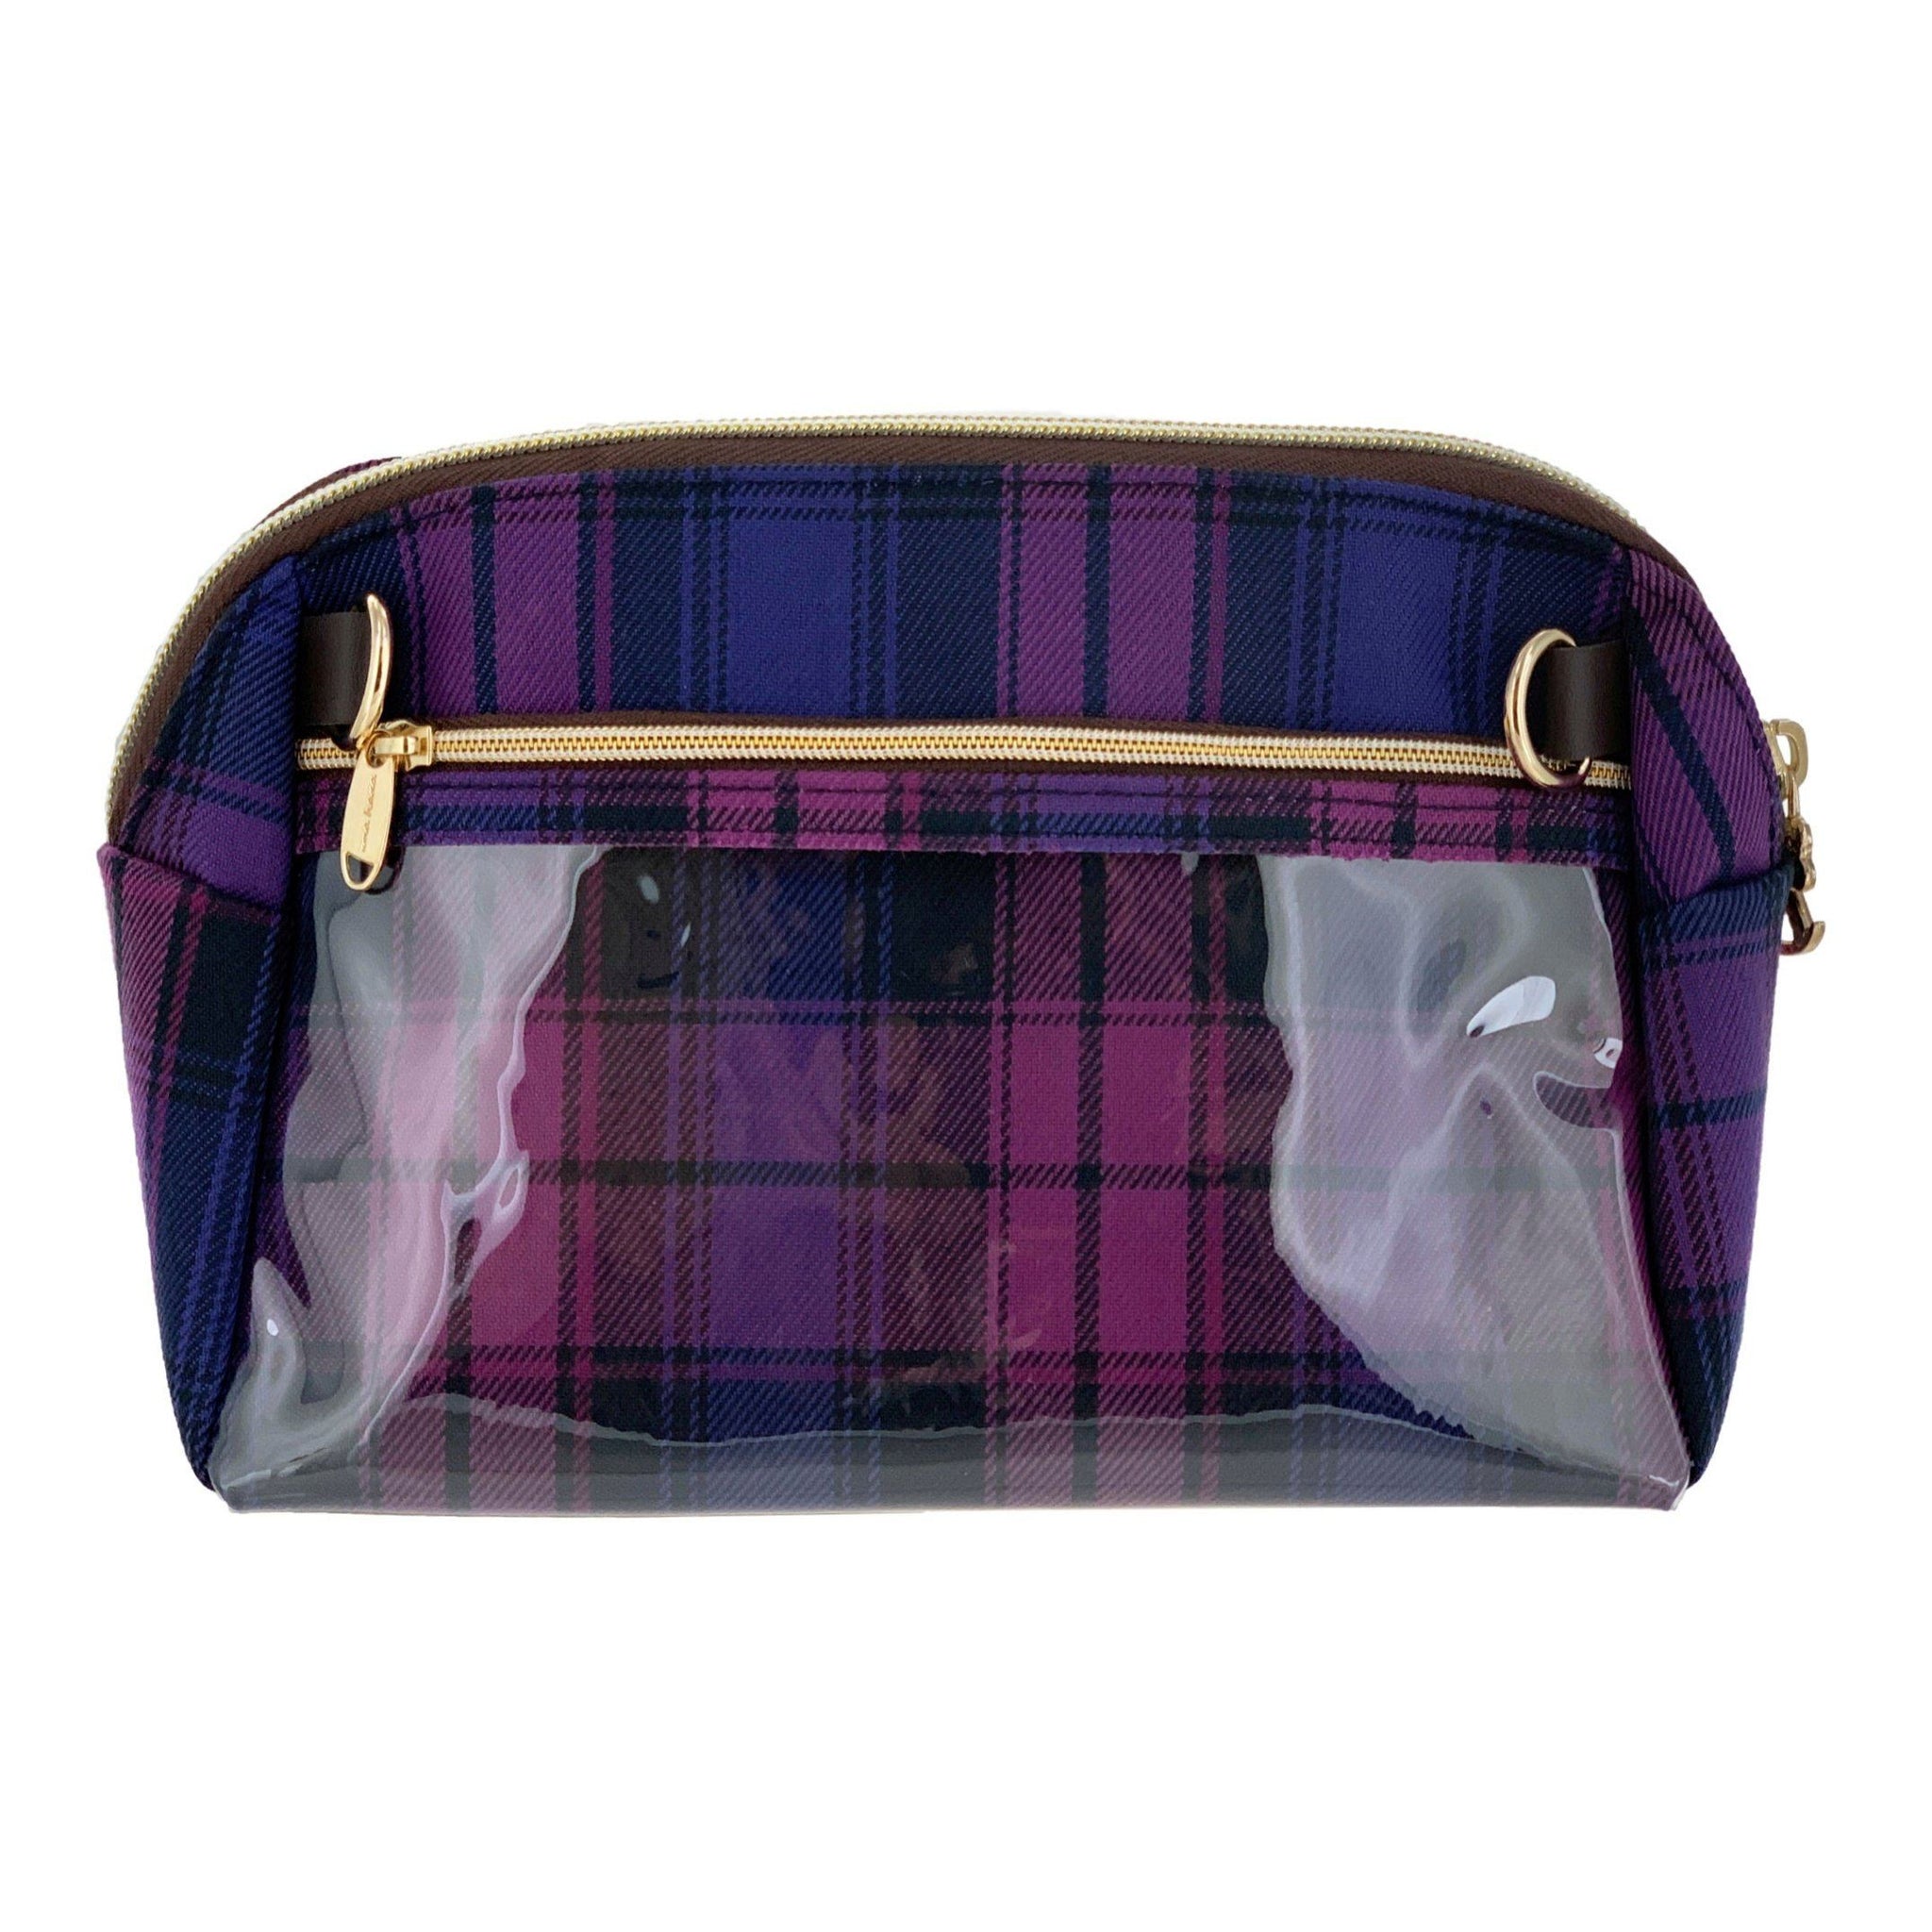 Purple & Pink Tartan Plaid Mufe Crossbody Bag Crossbody Tworgis 